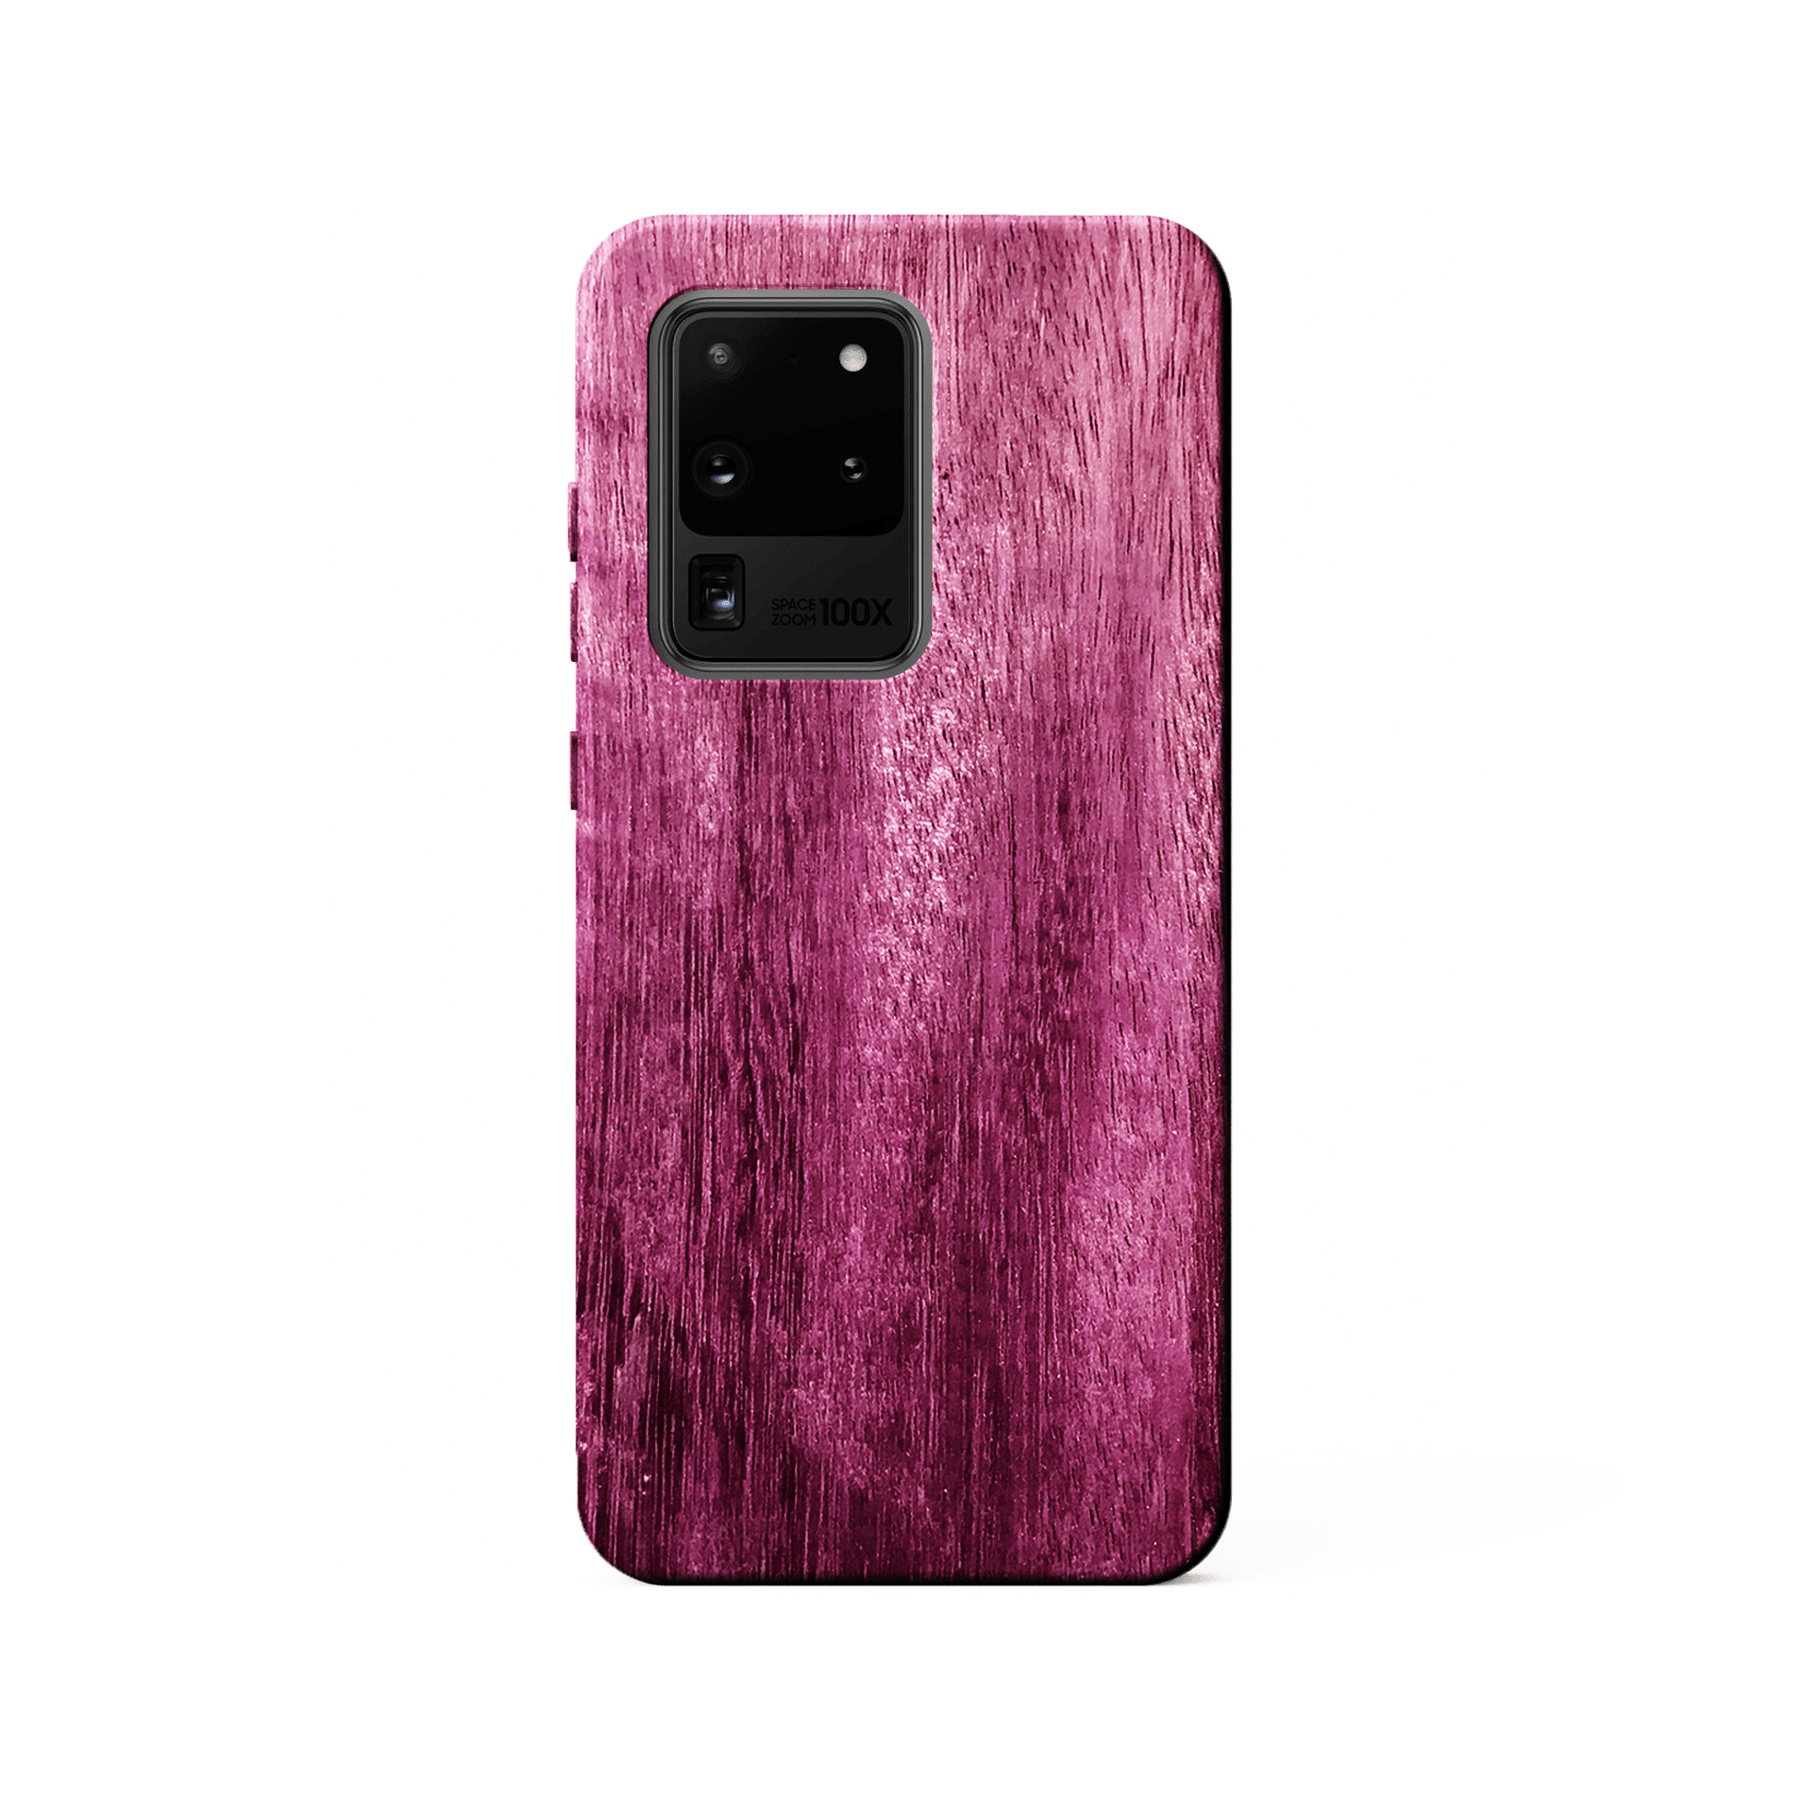 Galaxy S20 Ultra 5G Wood Case